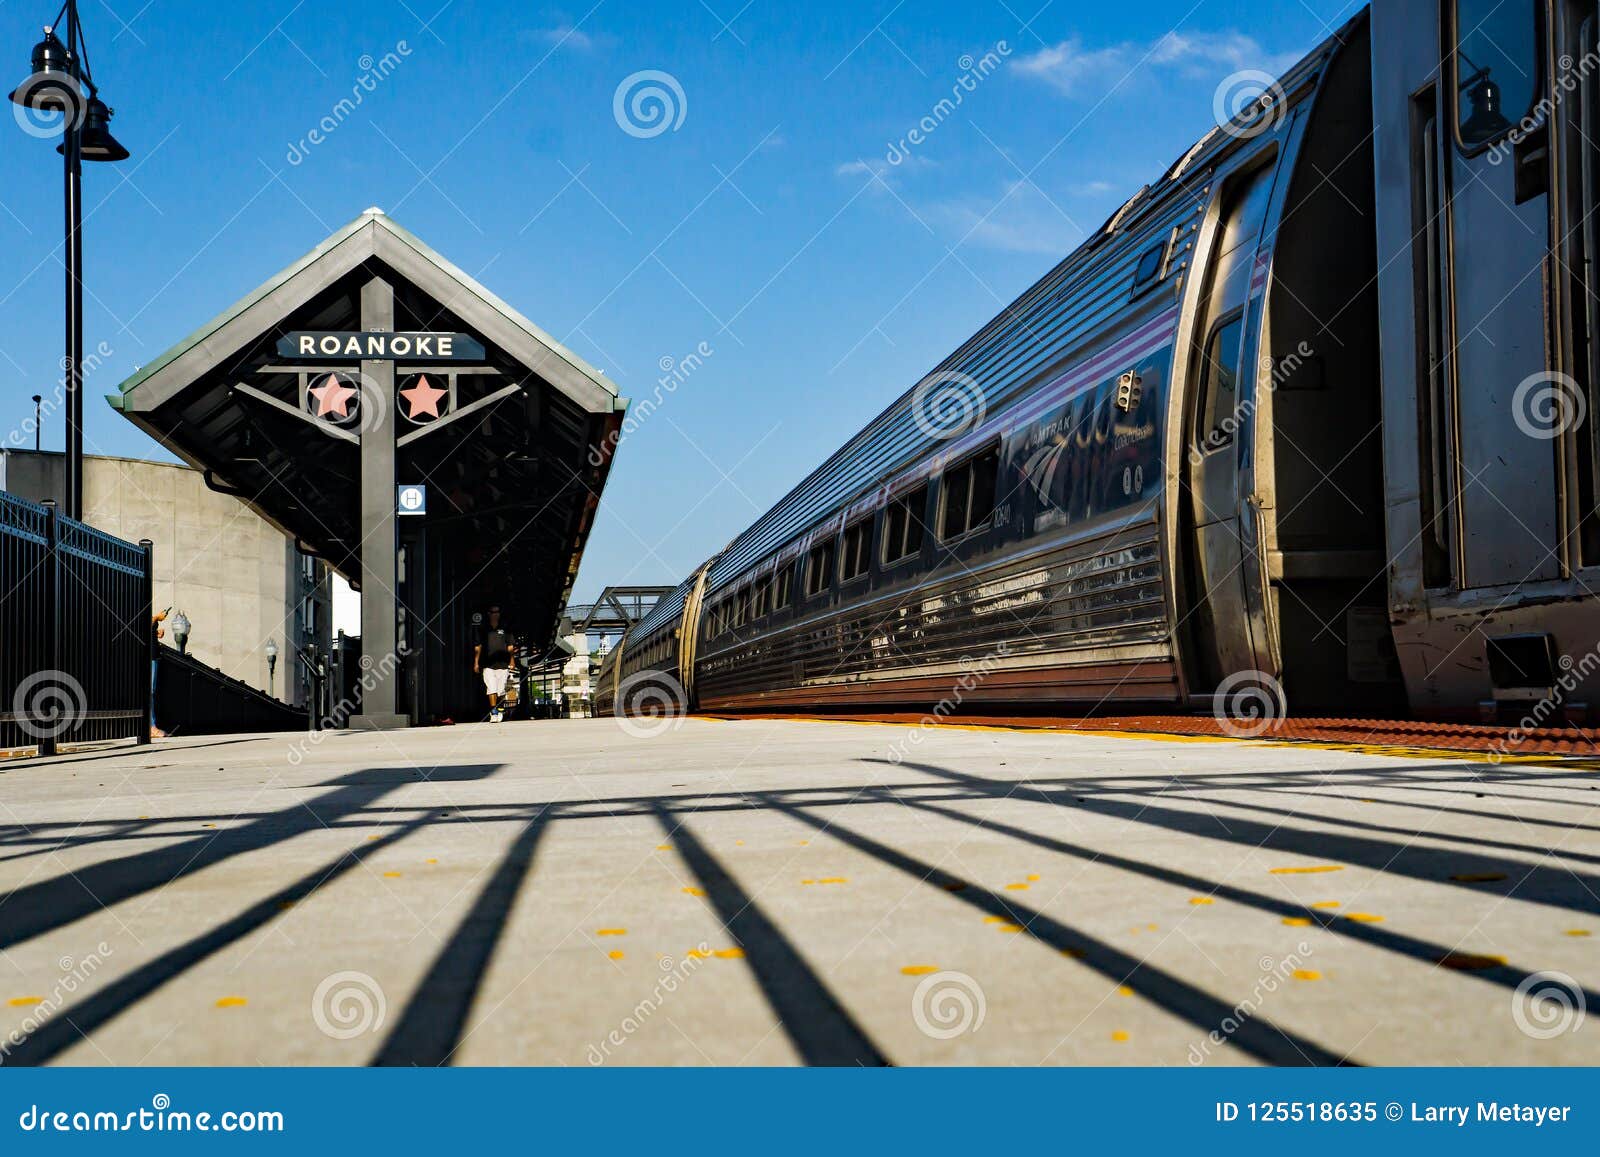 Amtrak Loading Platform